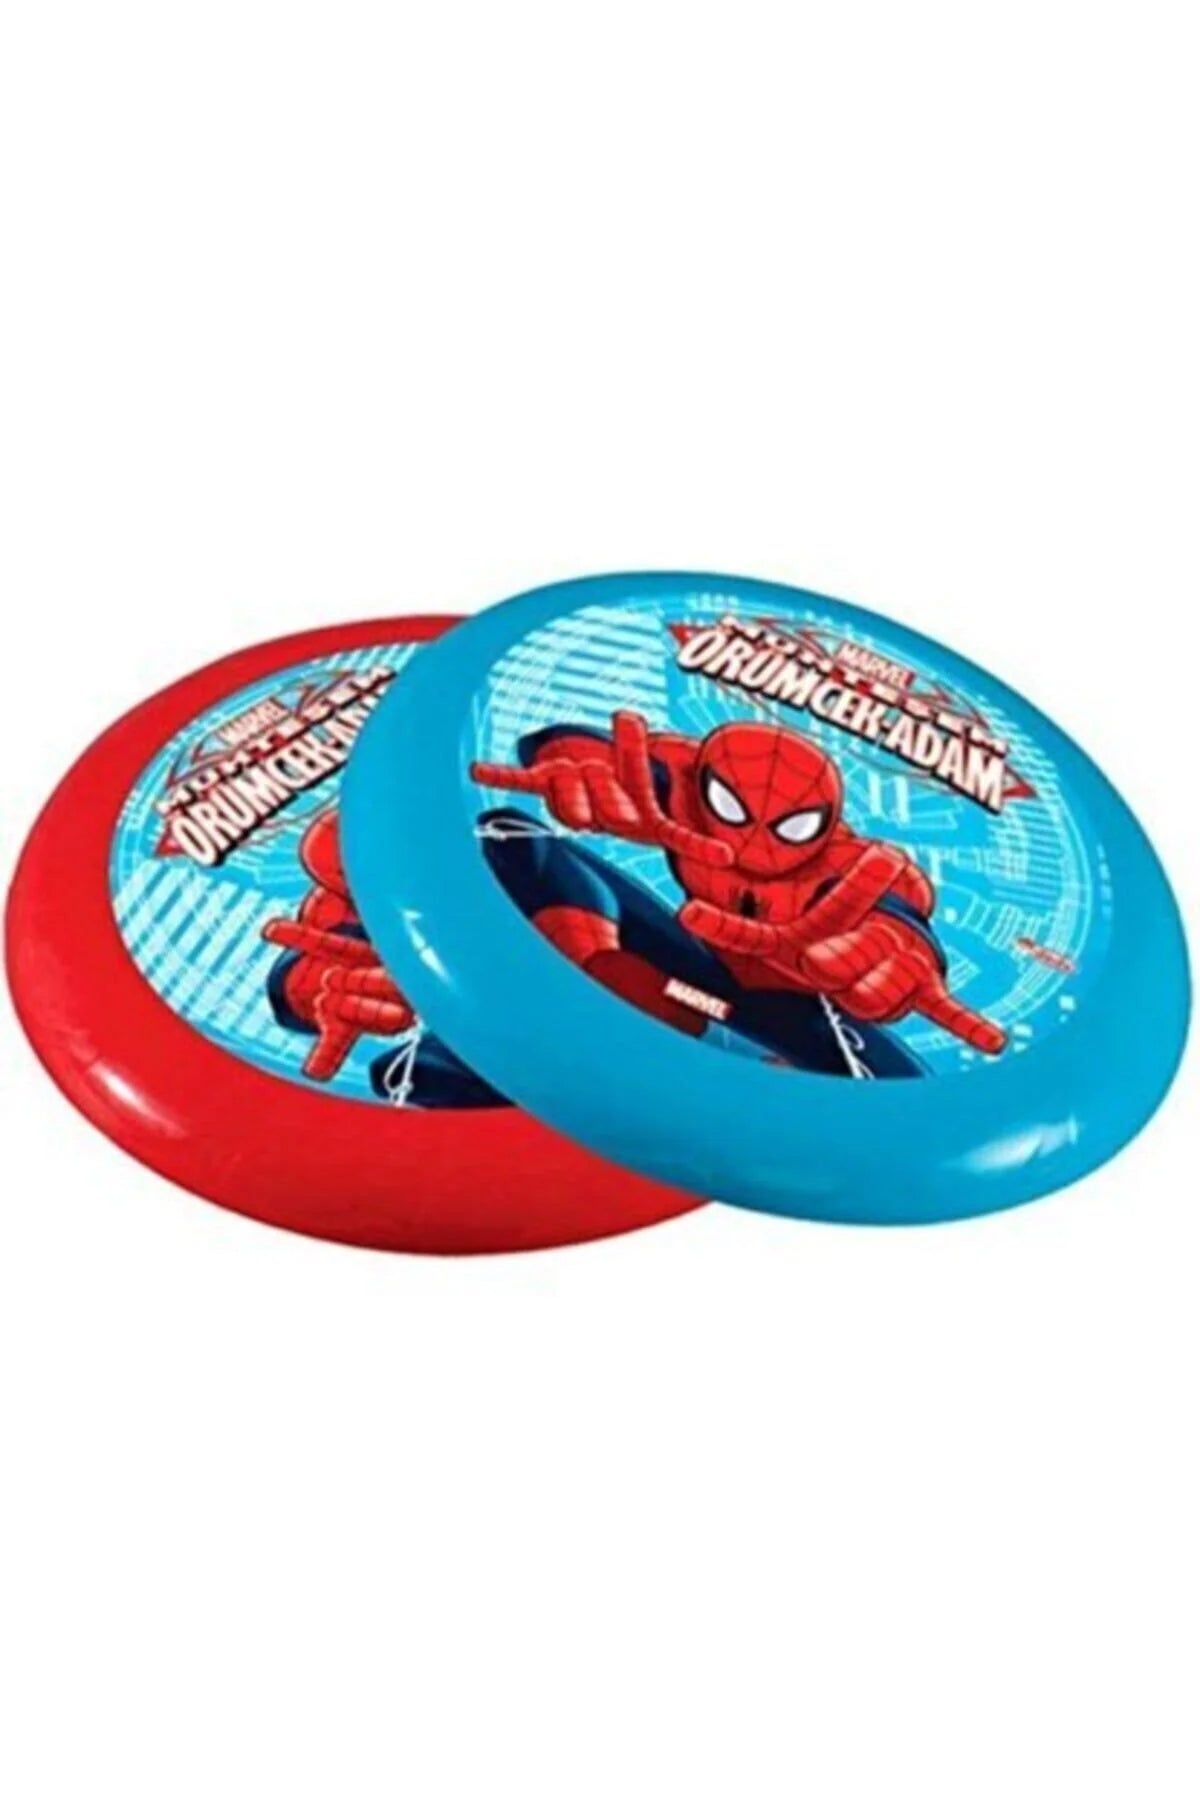 Dede Spiderman Frisbee Flying Set - Red